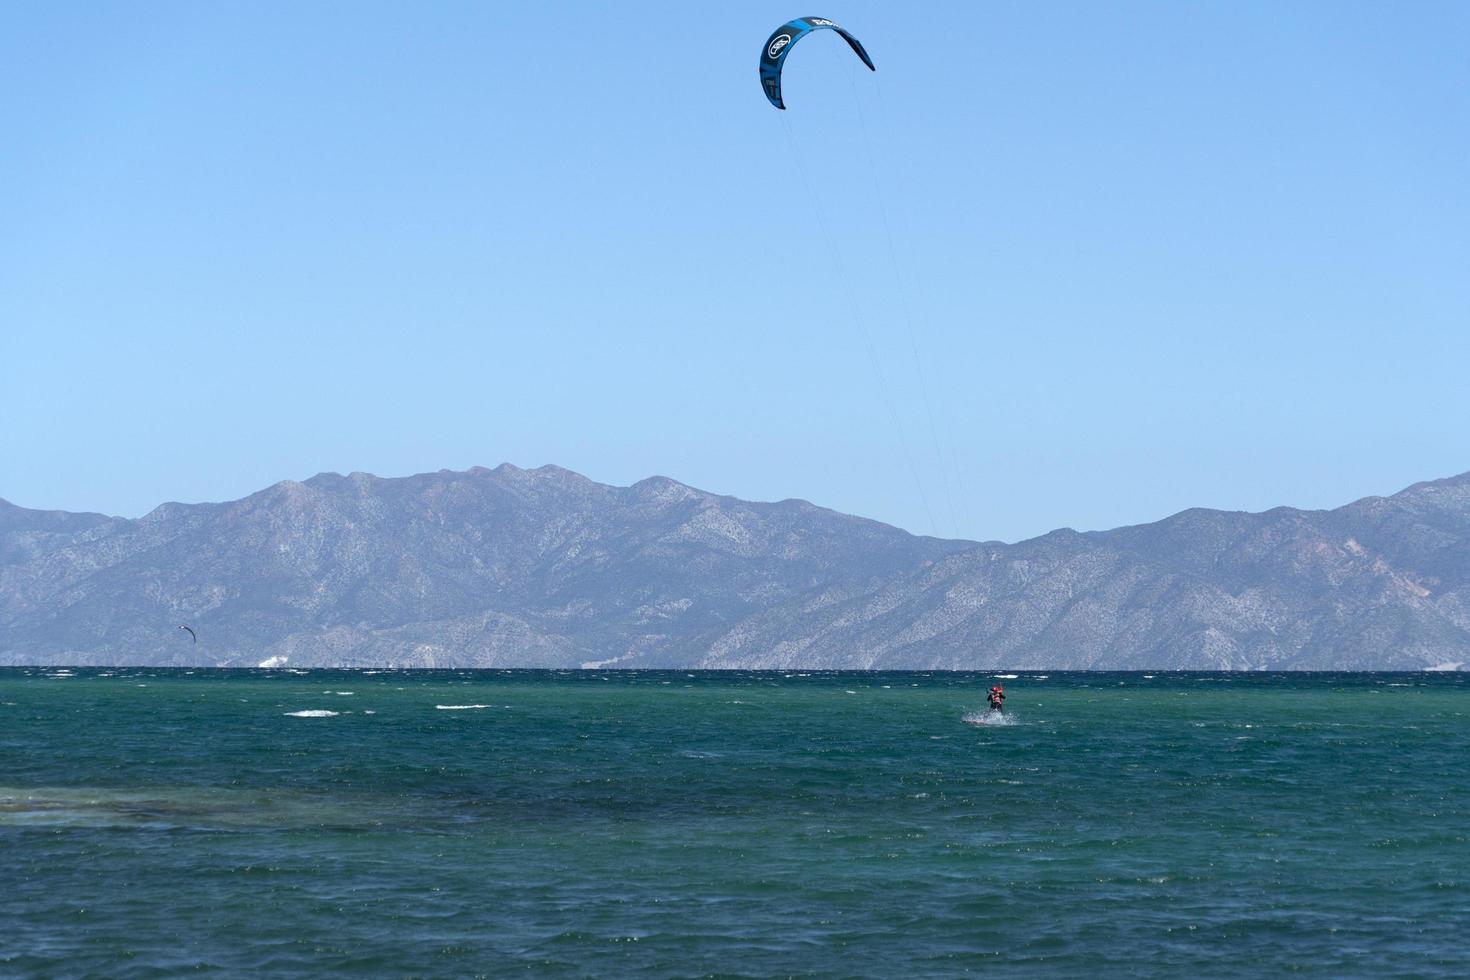 LA VENTANA, MEXICO - FEBRUARY 16 2020 - kite surfering on the windy beach photo